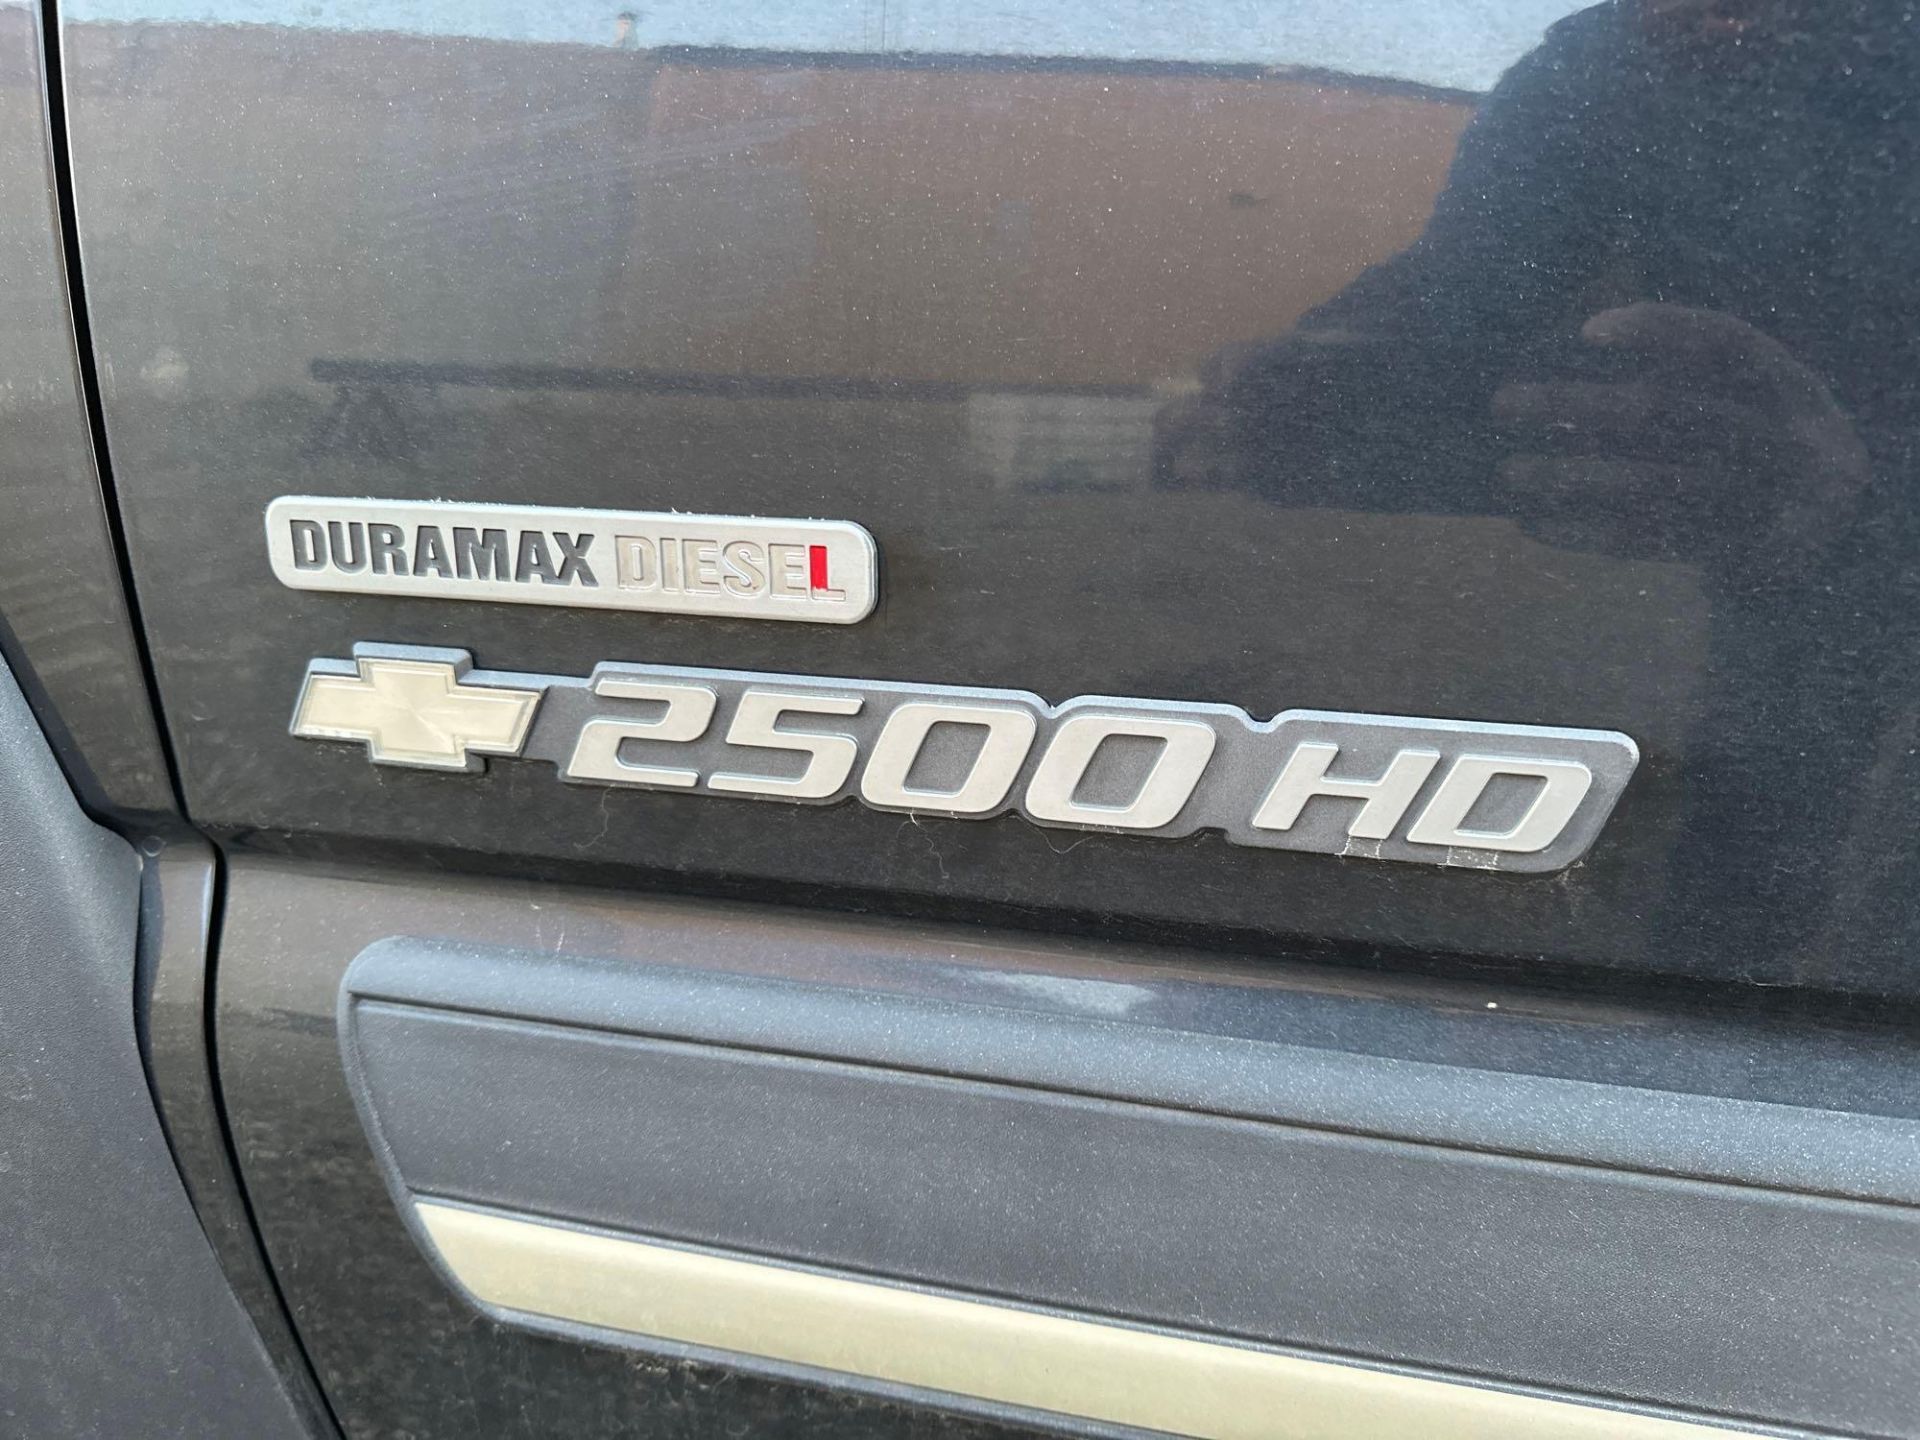 2003 Chevrolet Silverado Duramax Diesel Extended Cab 4X4, VIN #: 1GCHK29183E178573 - Image 5 of 12